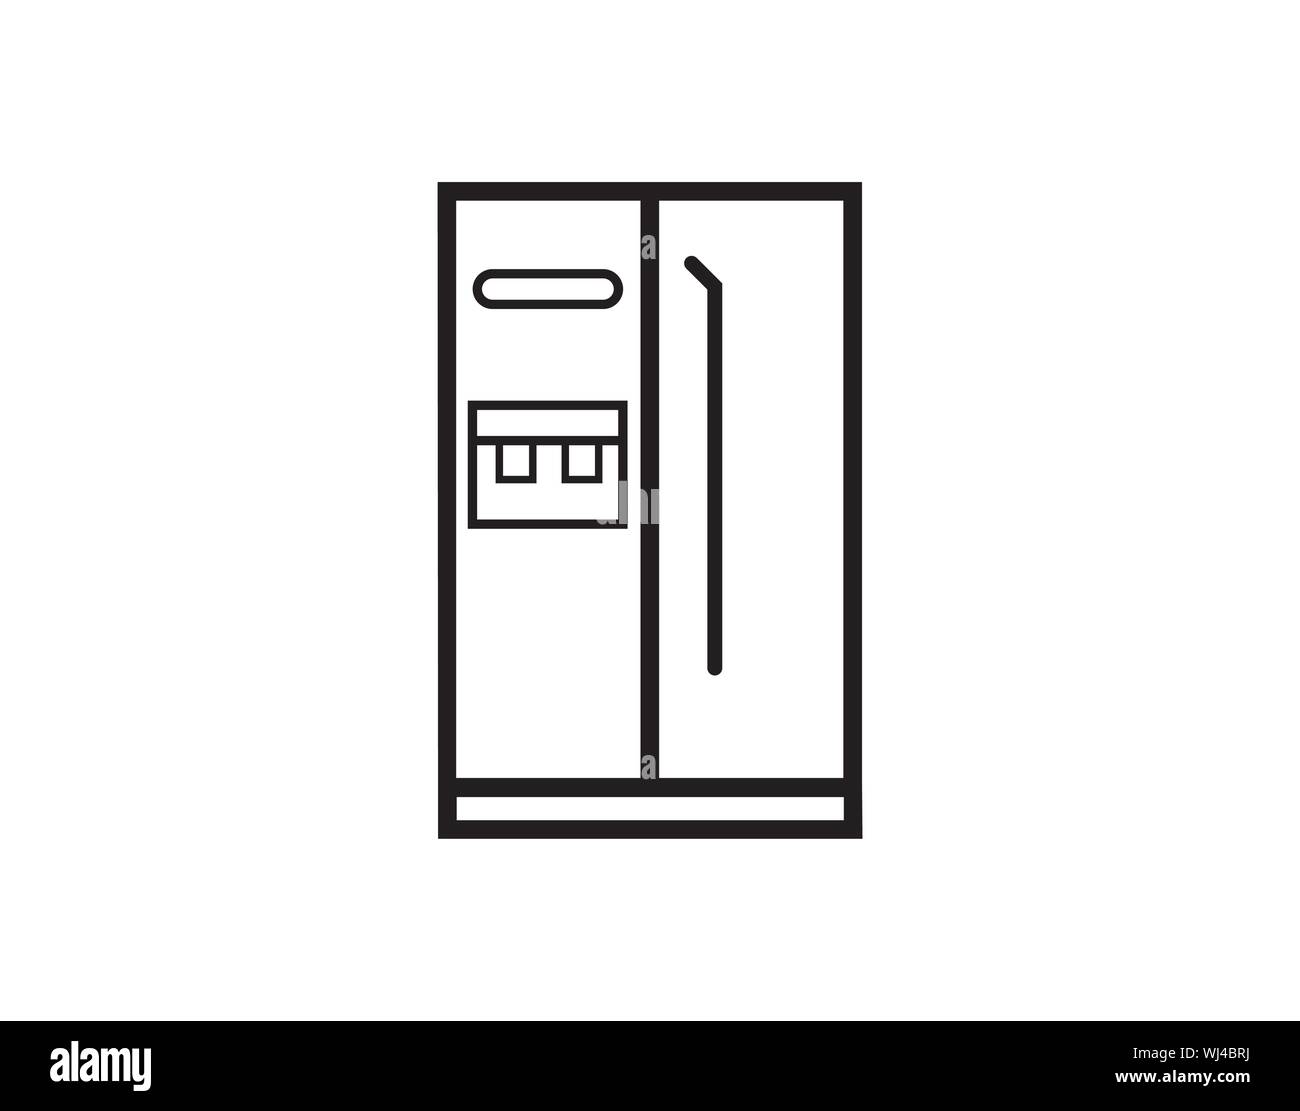 fridge freezer refrigerator condenser icon line black on white background Stock Vector